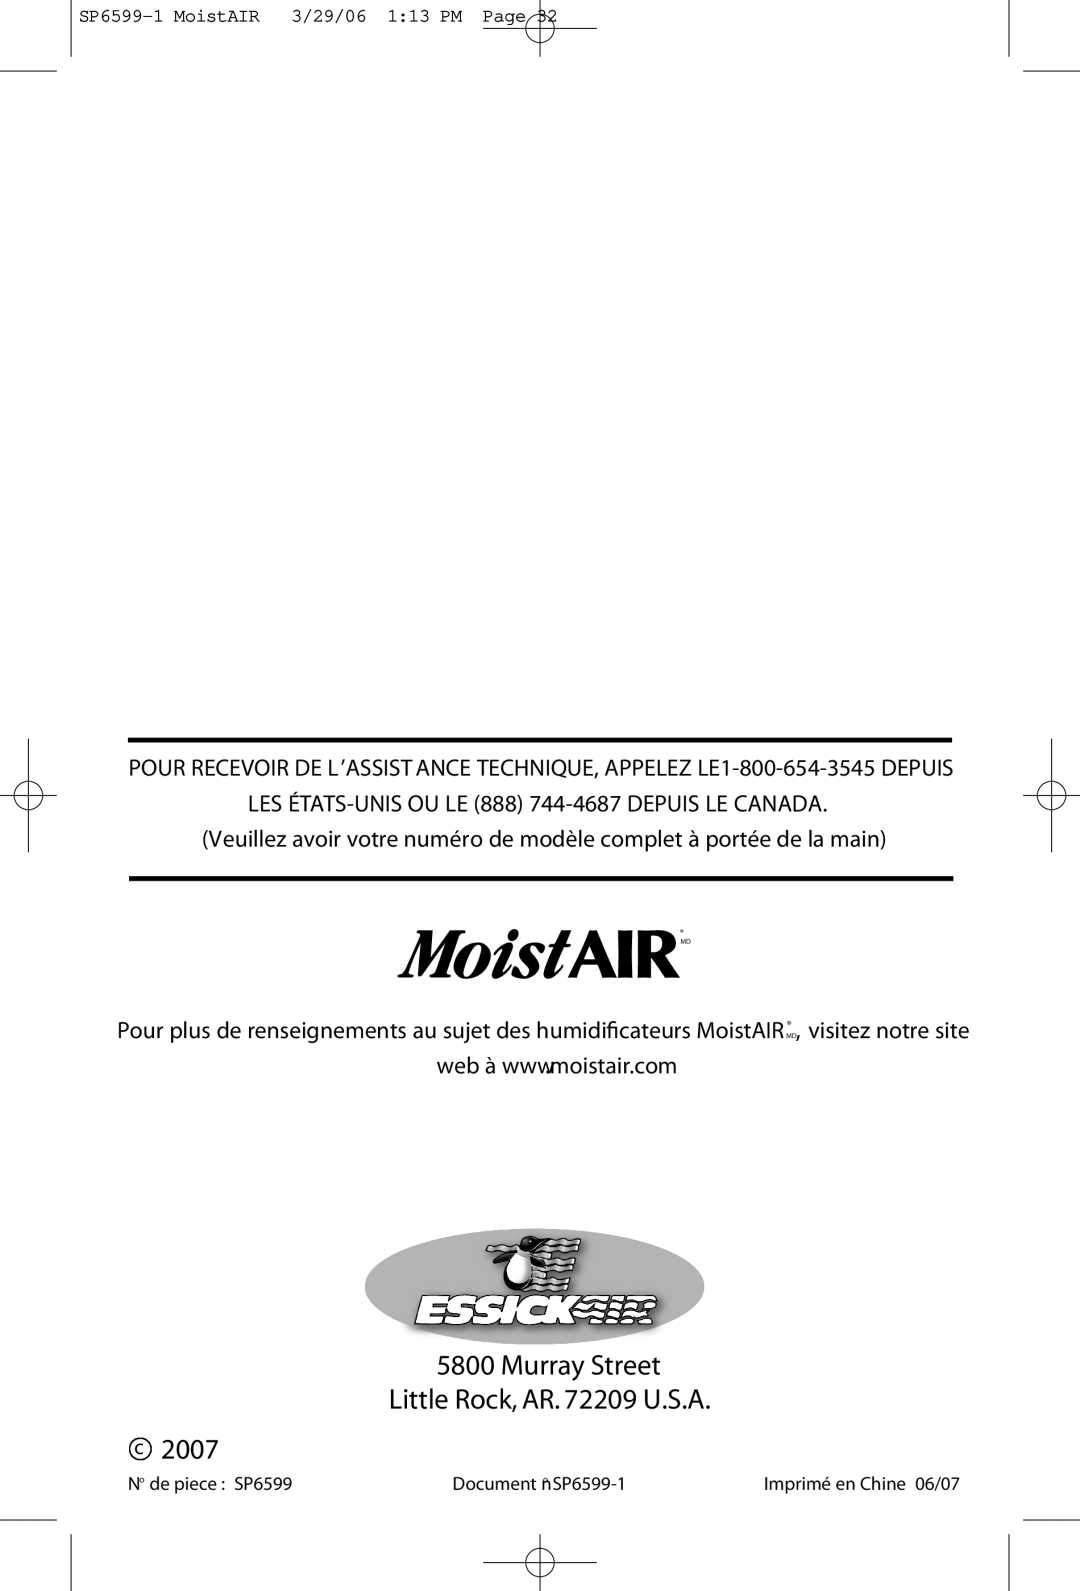 MoistAir MA 0800 0 owner manual c2007, Murray Street Little Rock, AR. 72209 U.S.A 